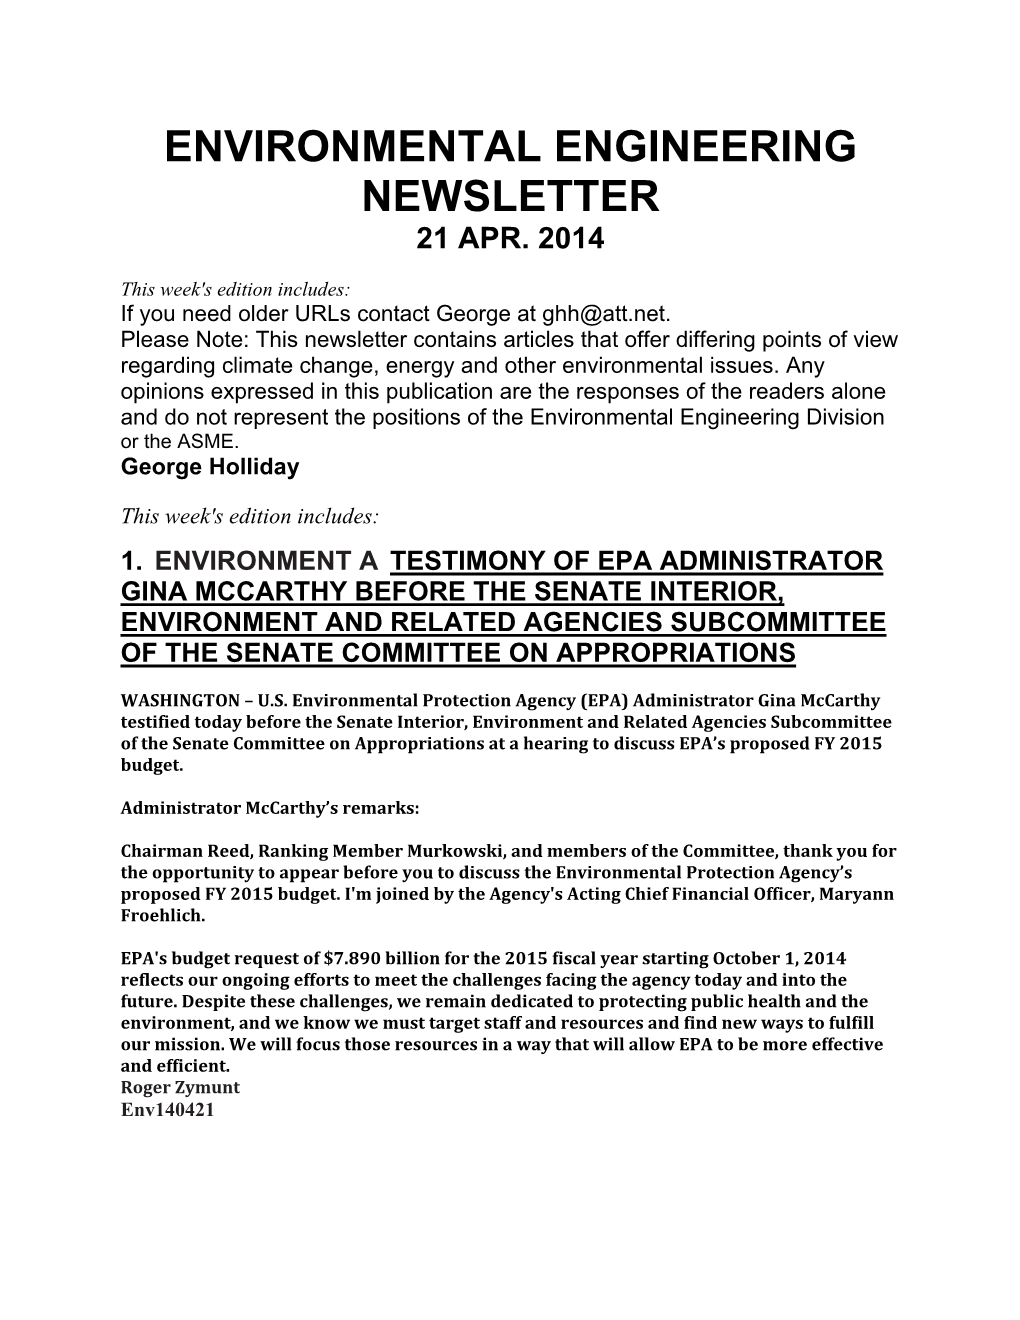 Environmental Engineering Newsletter 21 Apr